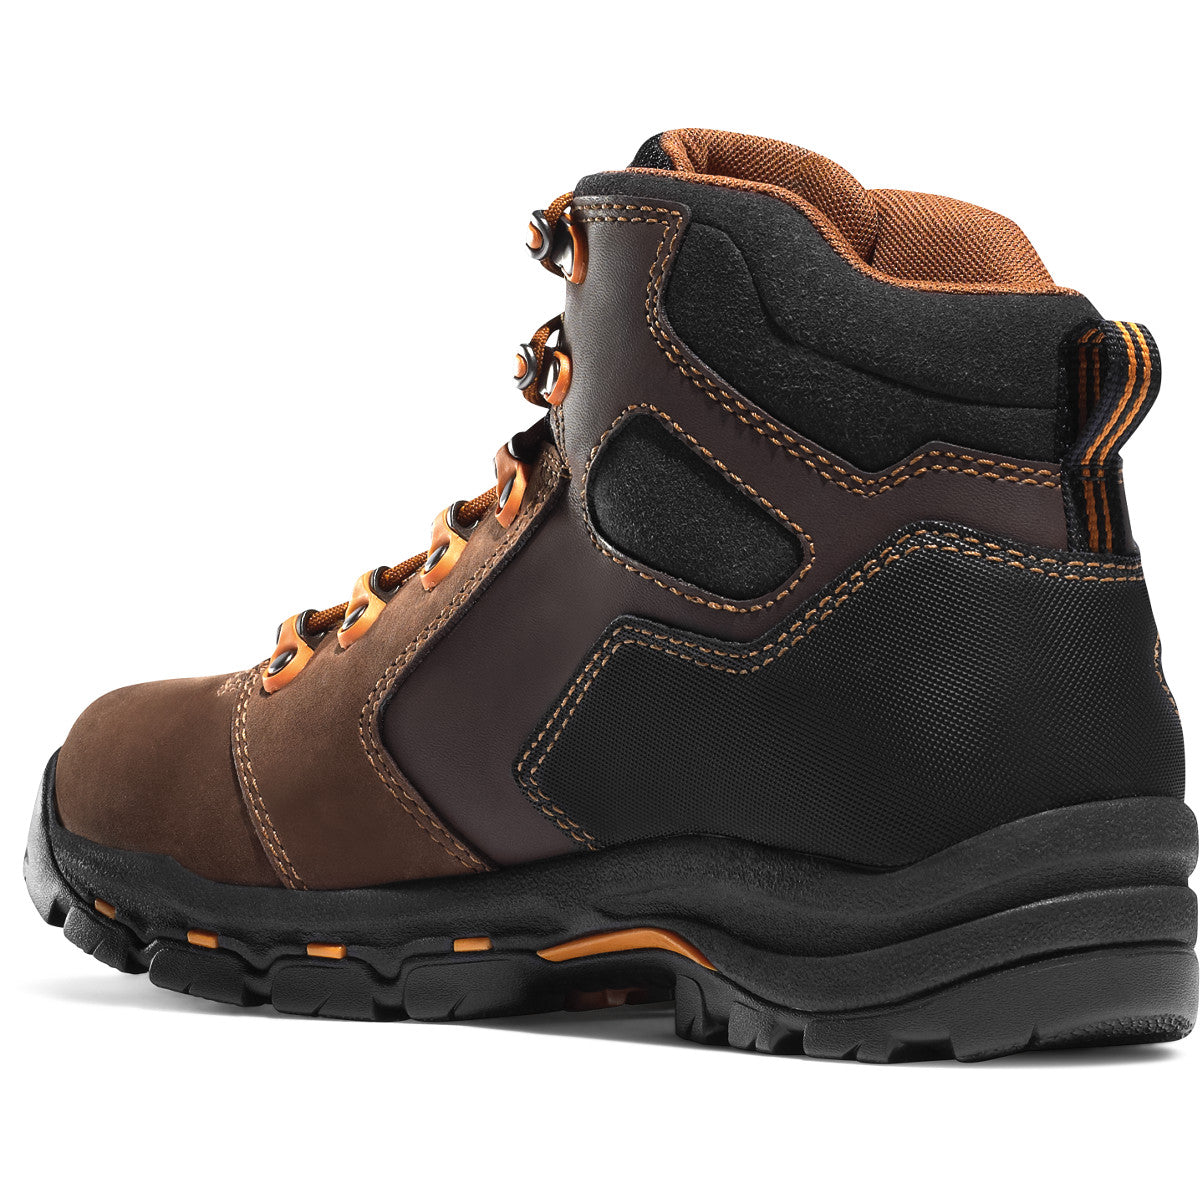 Danner Men's Vicious 4.5" Brown & Orange Composite Toe Boots 13860